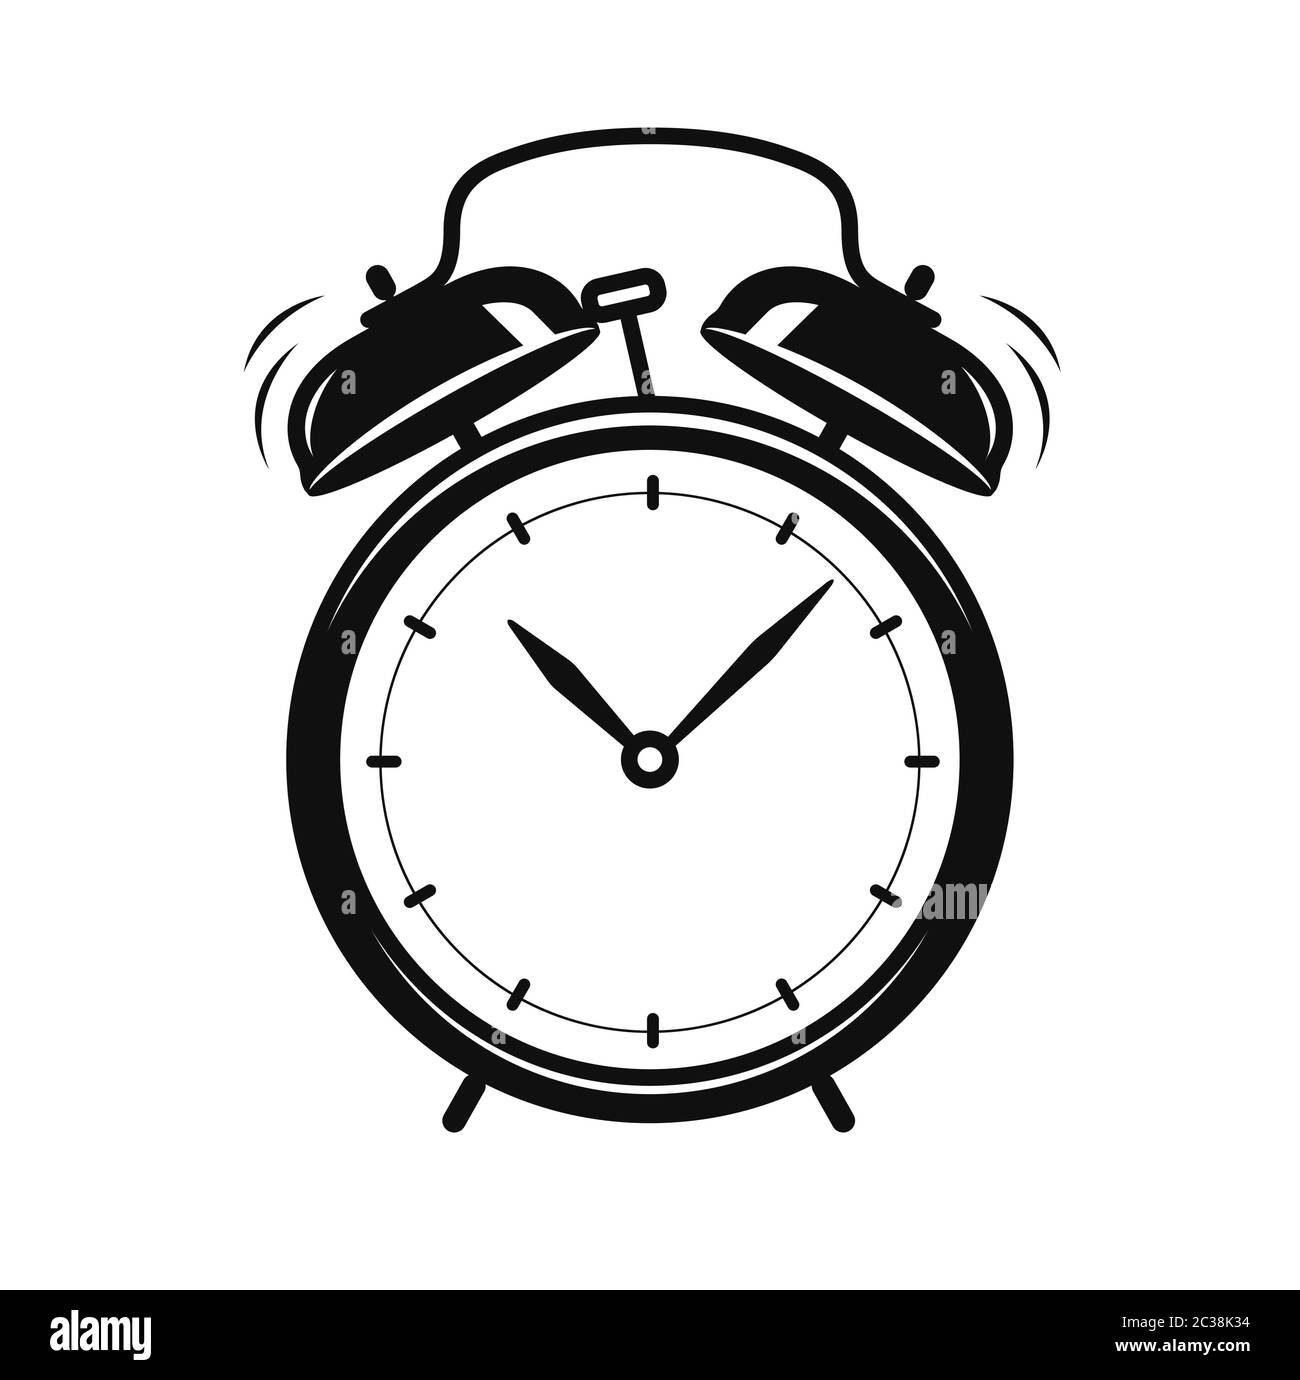 Alarm clock icon. Time, deadline vector illustration Stock Vector